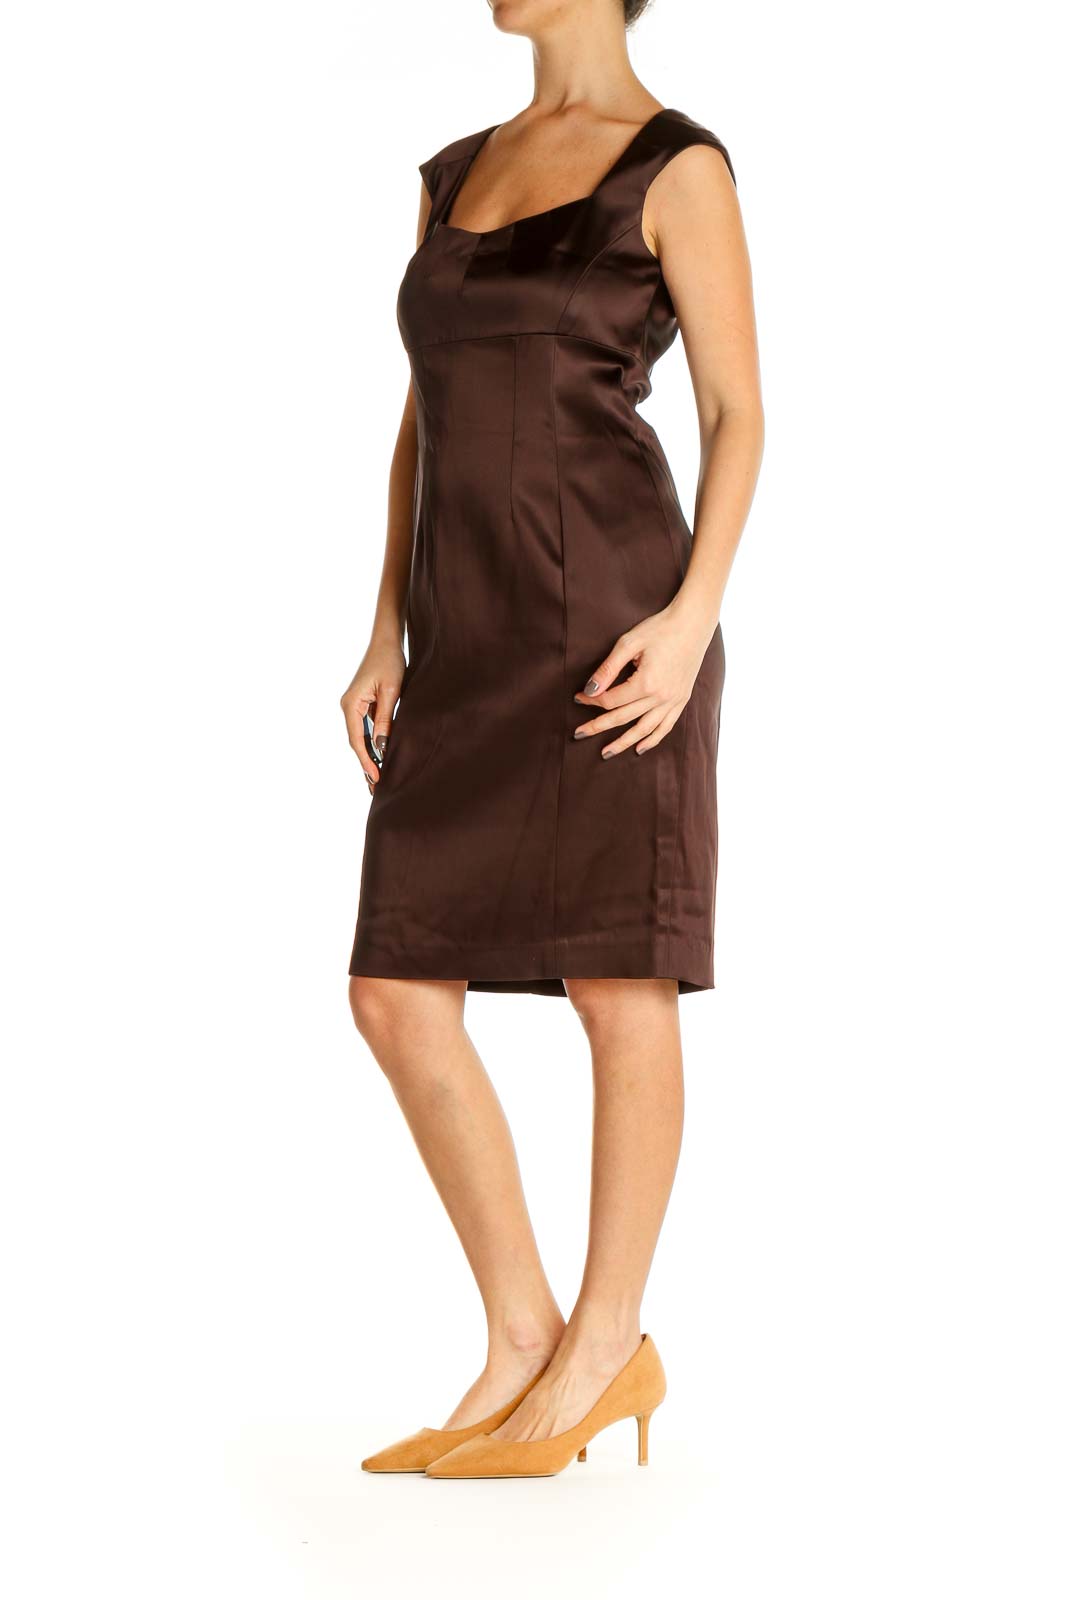 Calvin Klein - Brown Solid Classic Sheath Dress Nylon Acetate Polyurethane  | SilkRoll